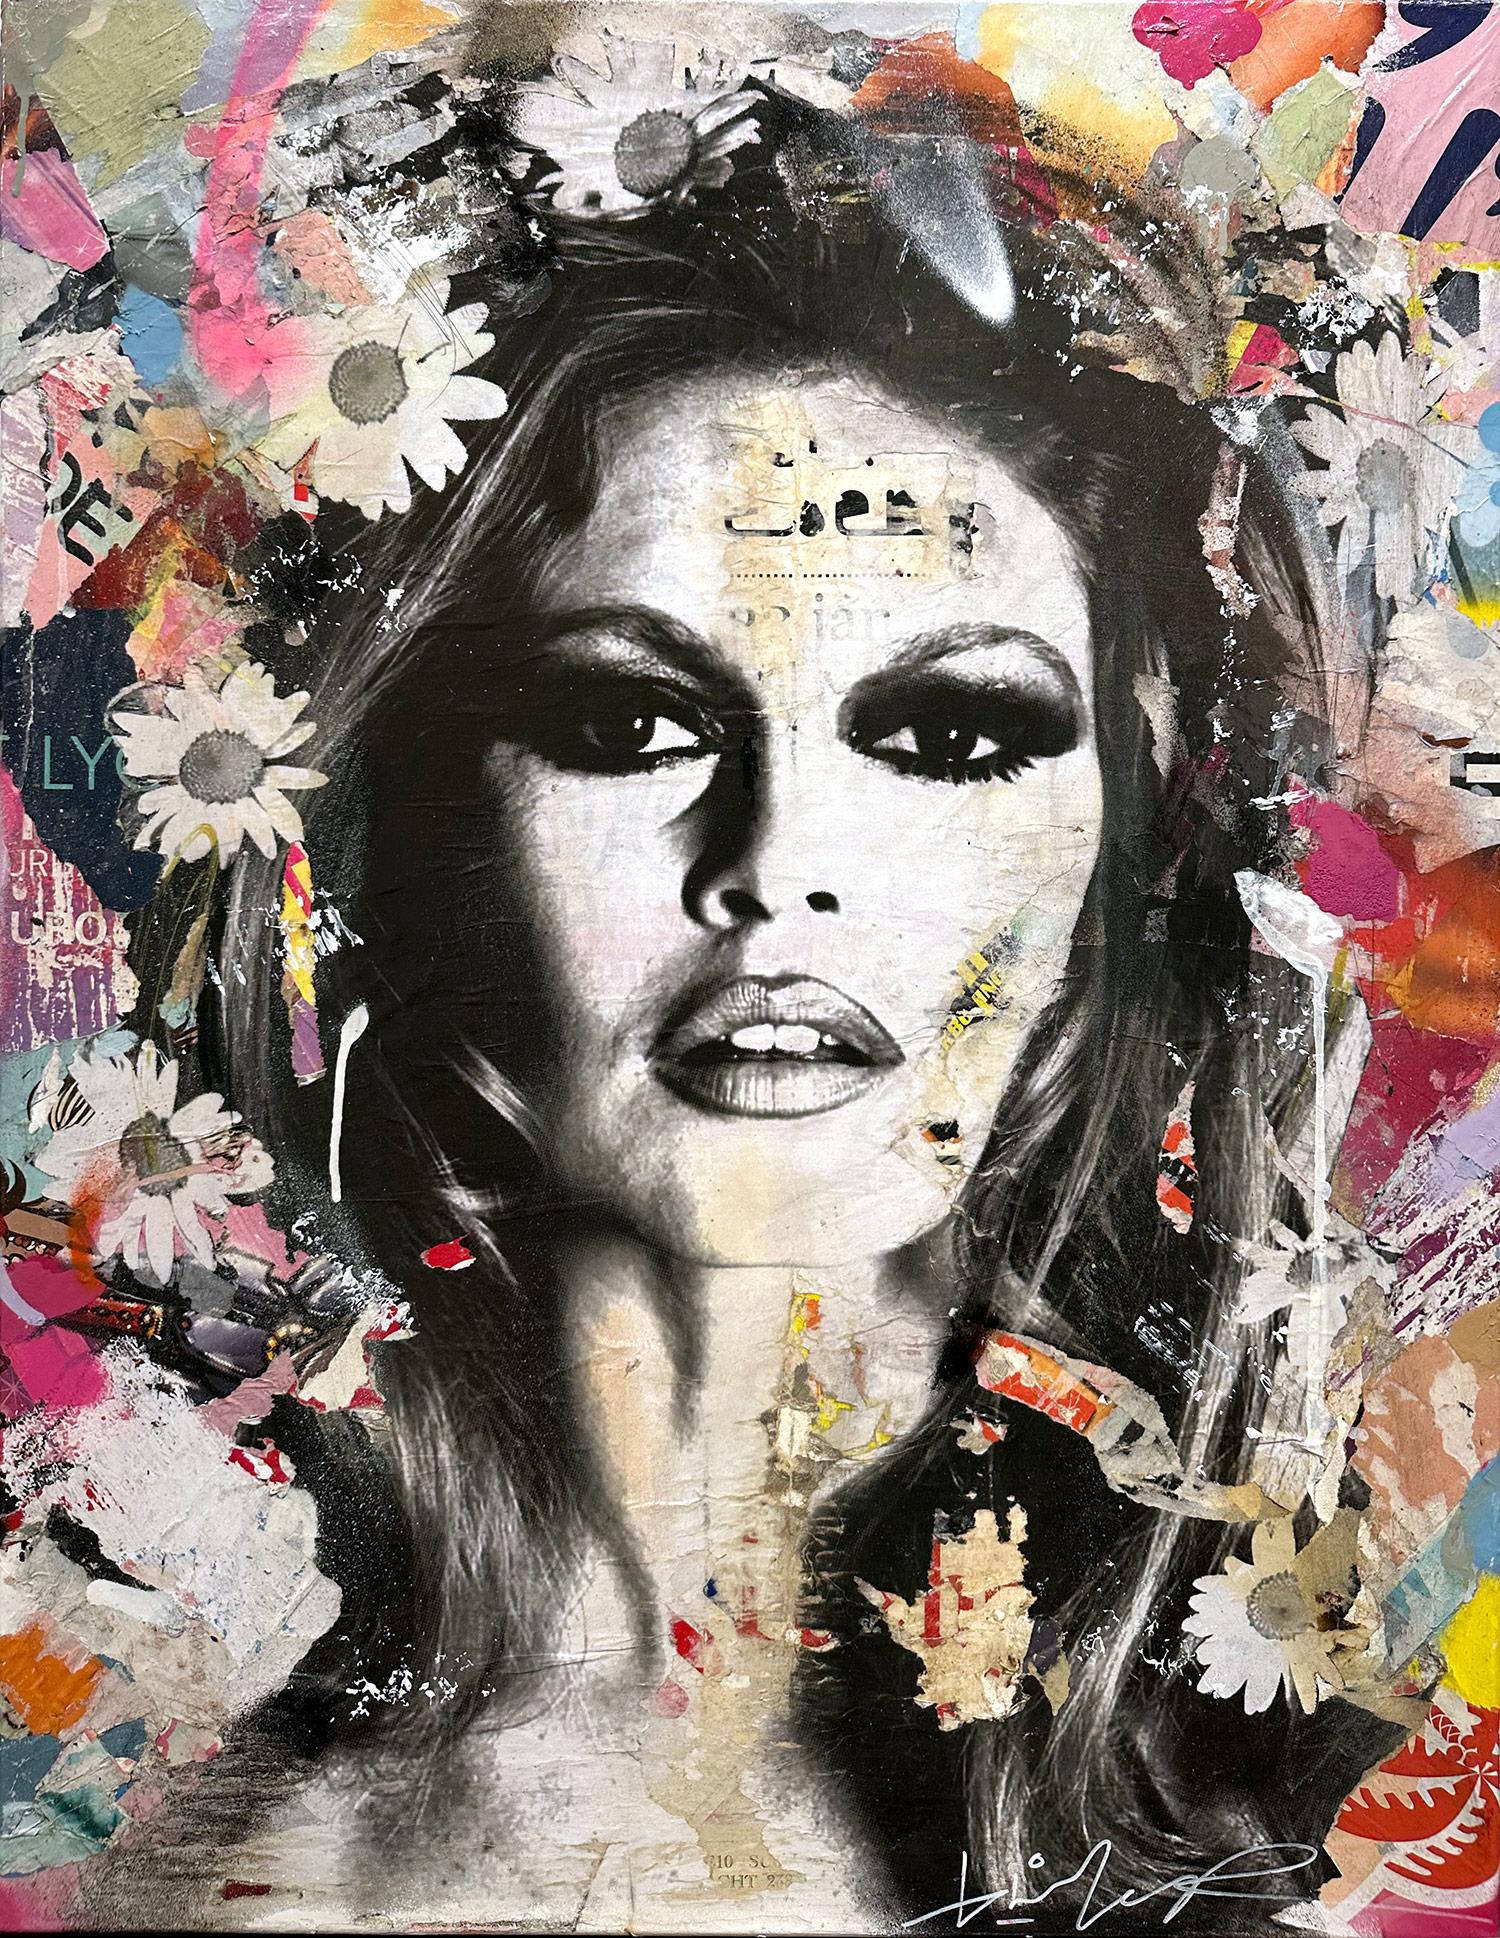 Gieler Abstract Painting - "She’s Your Friend" Brigitte Bardot Pop Art Portrait Décollage Painting Canvas